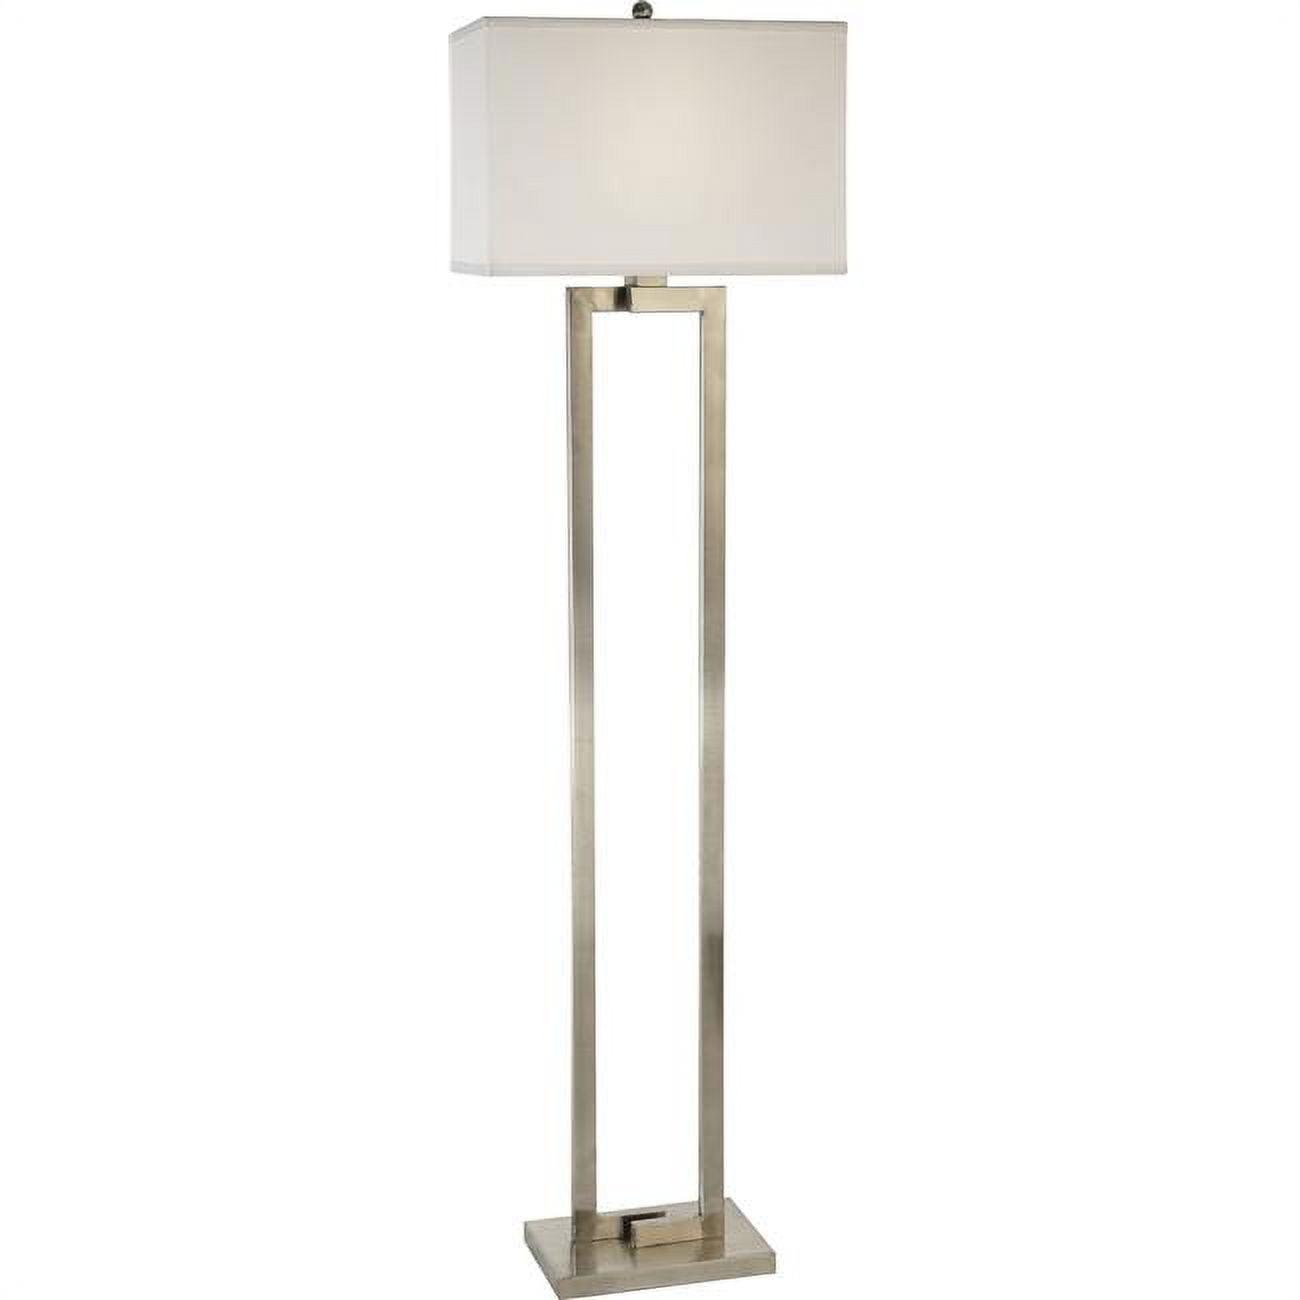 Elegant Nickel Finish Floor Lamp with White Rectangular Shade